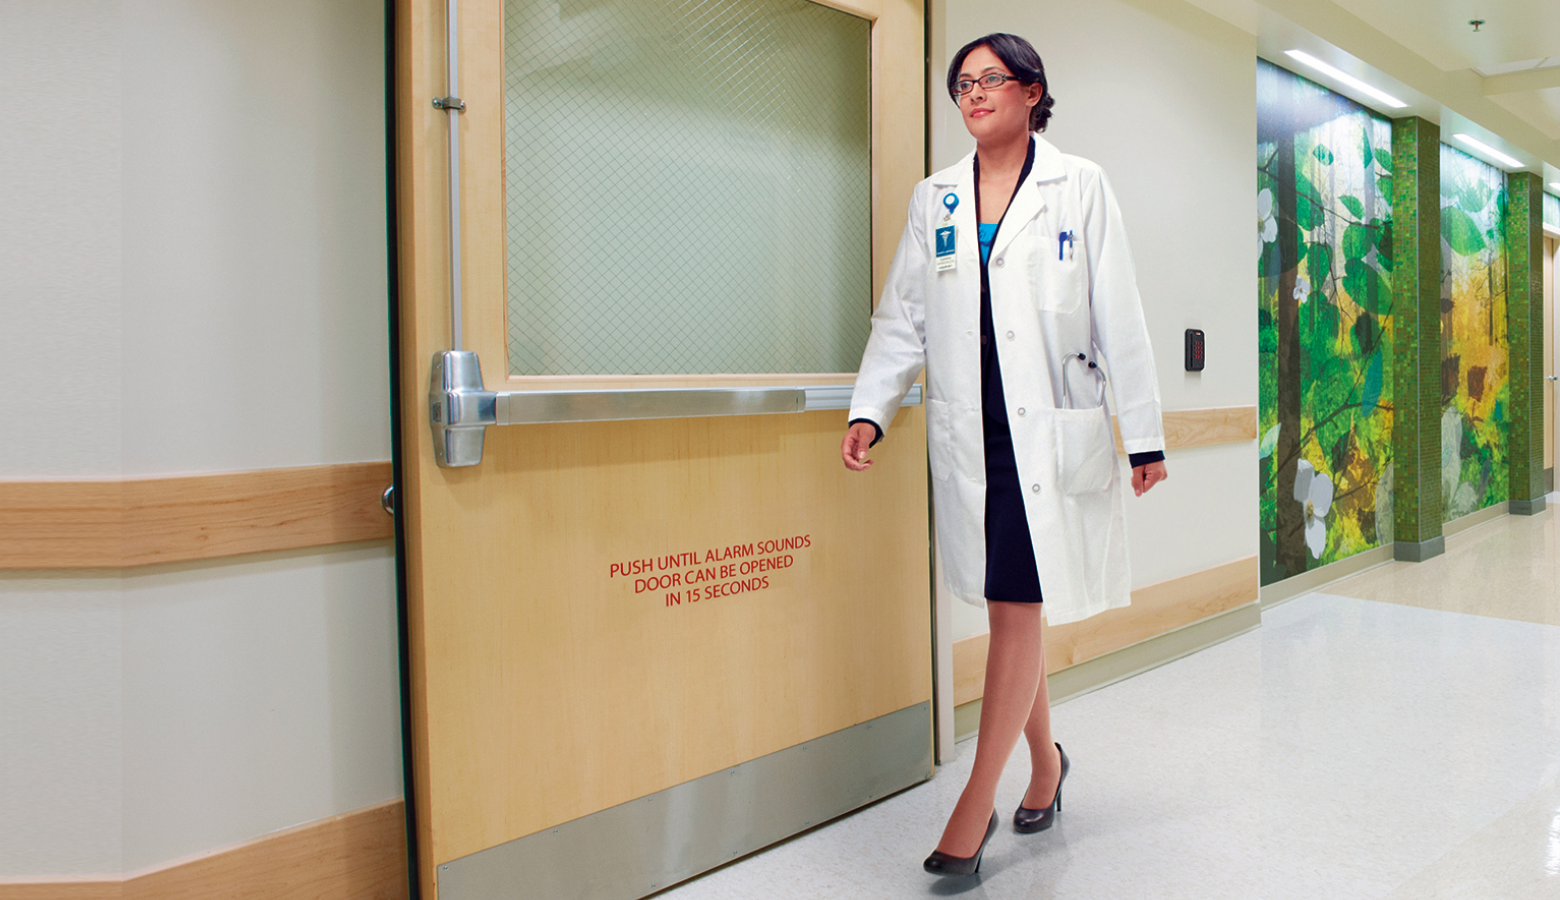 Physician walking through ER door with networked wired door hardware